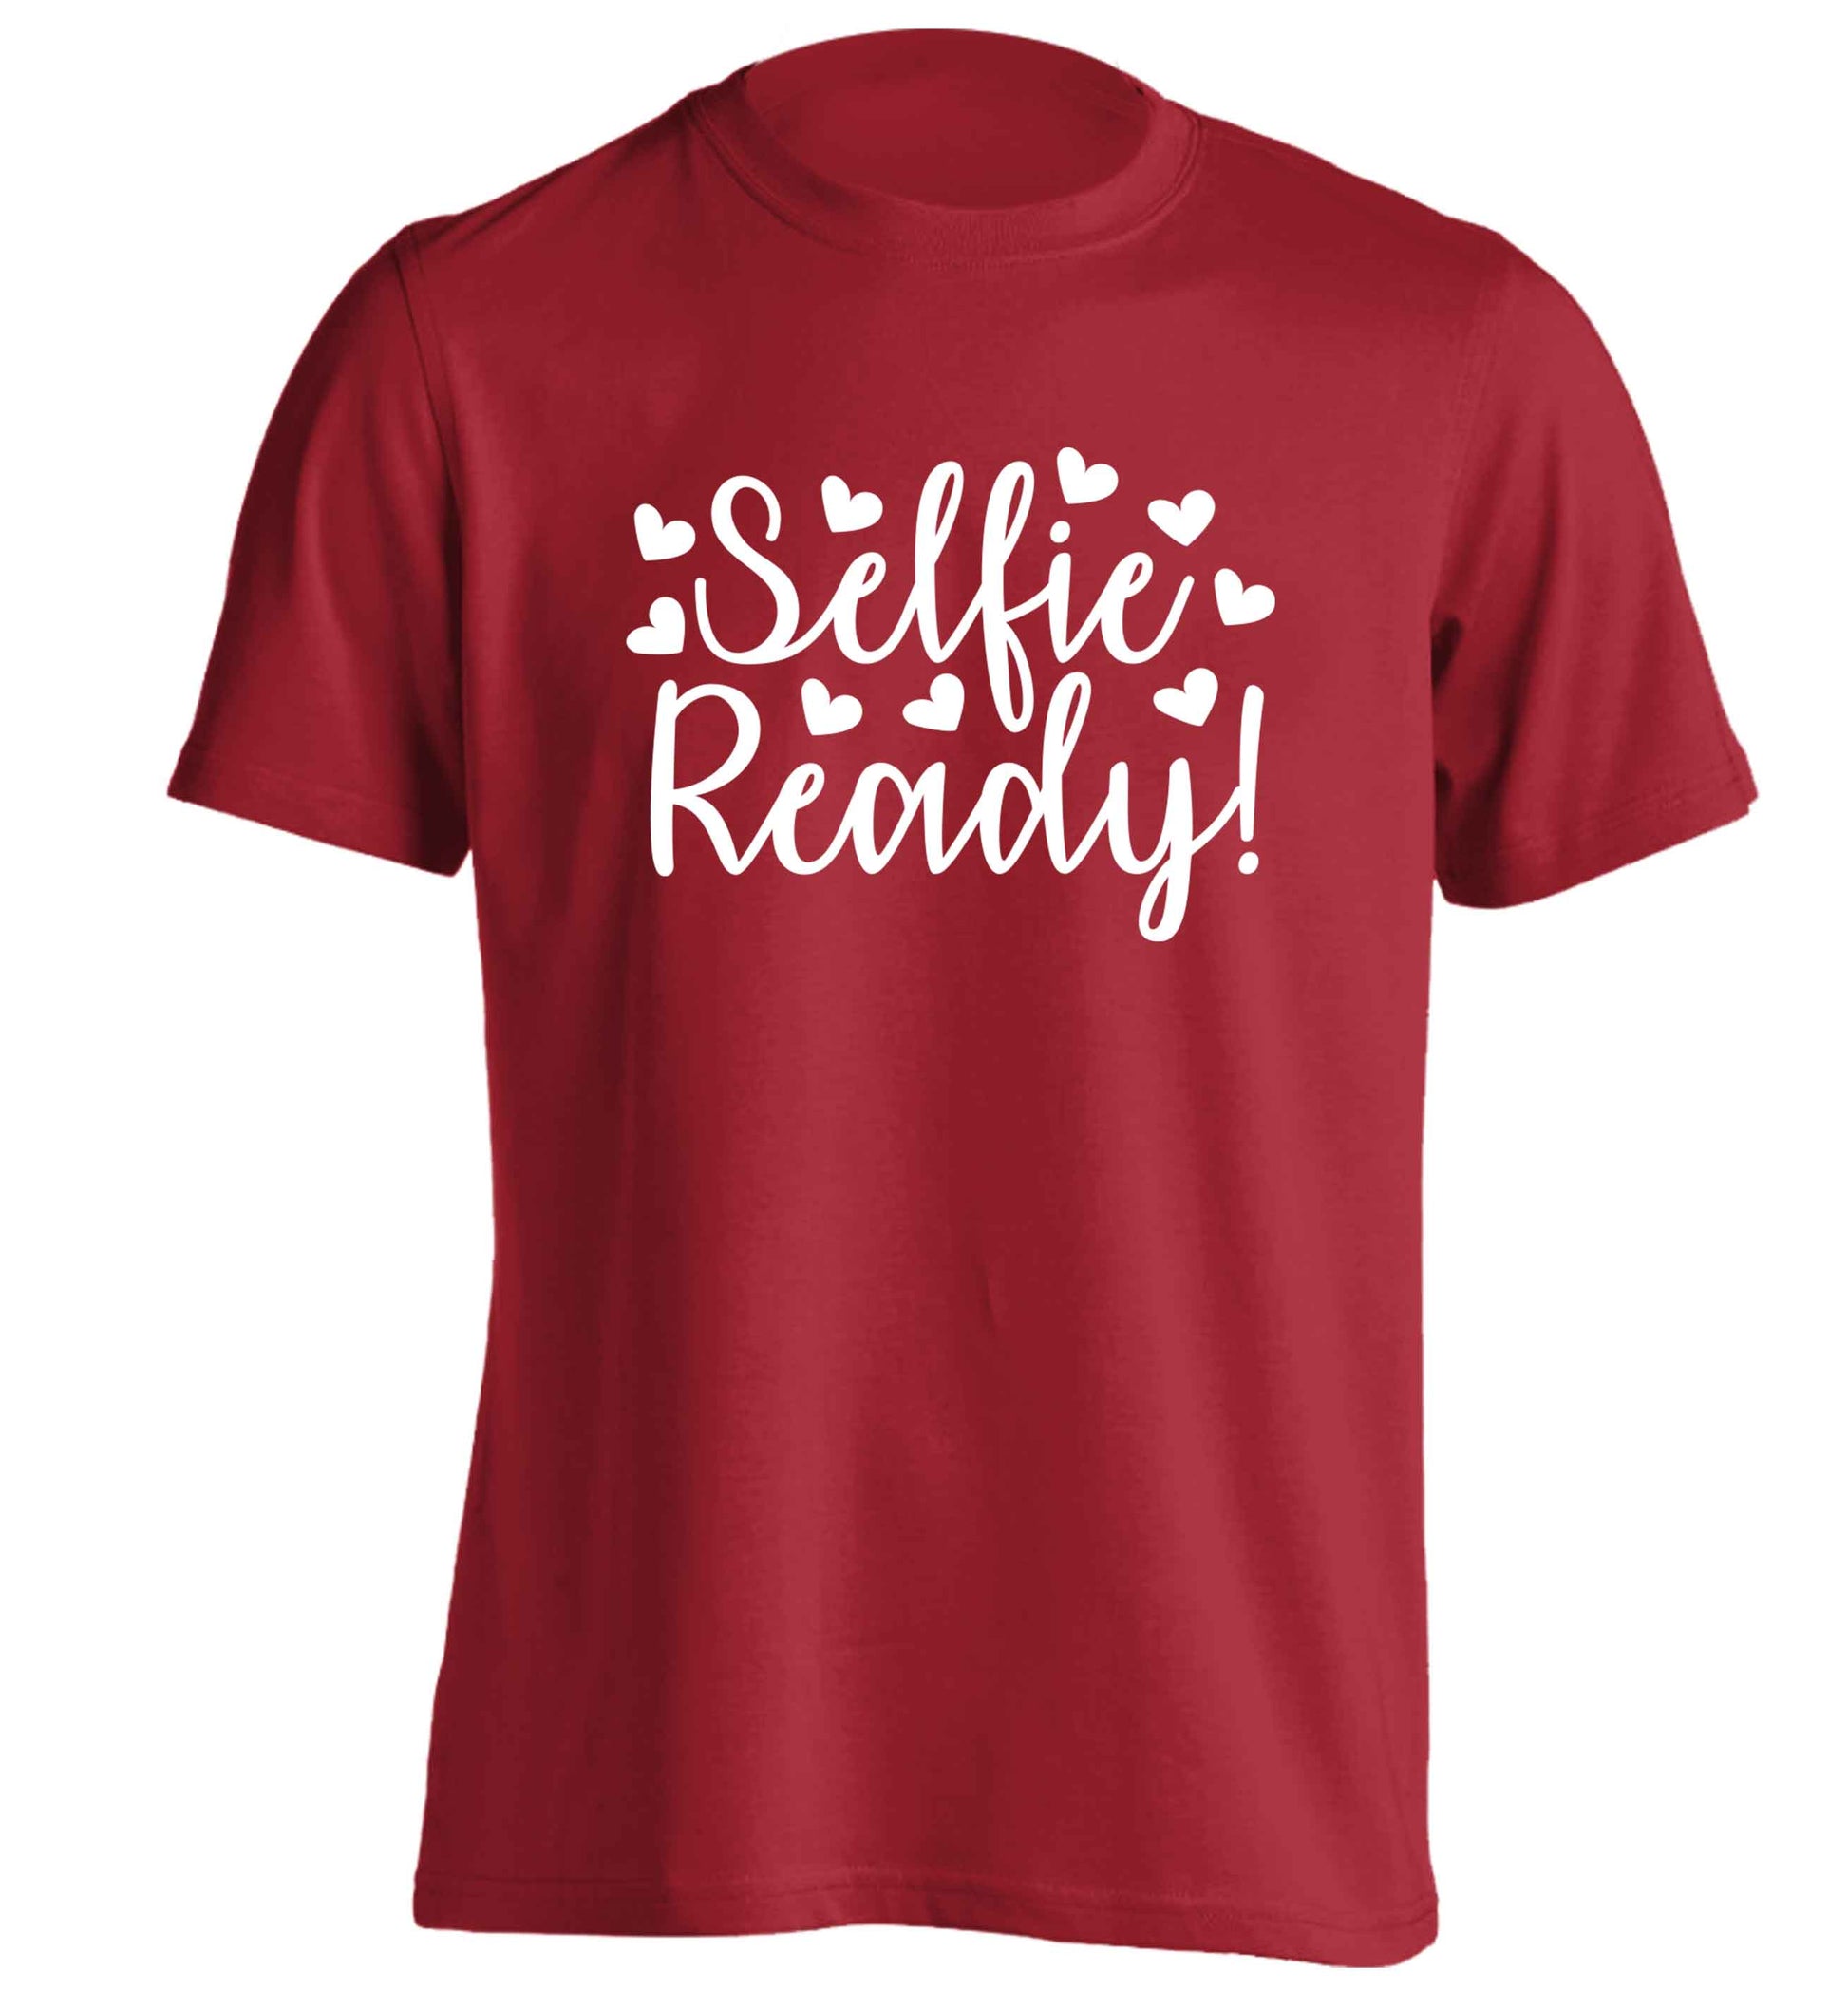 Selfie ready adults unisex red Tshirt 2XL